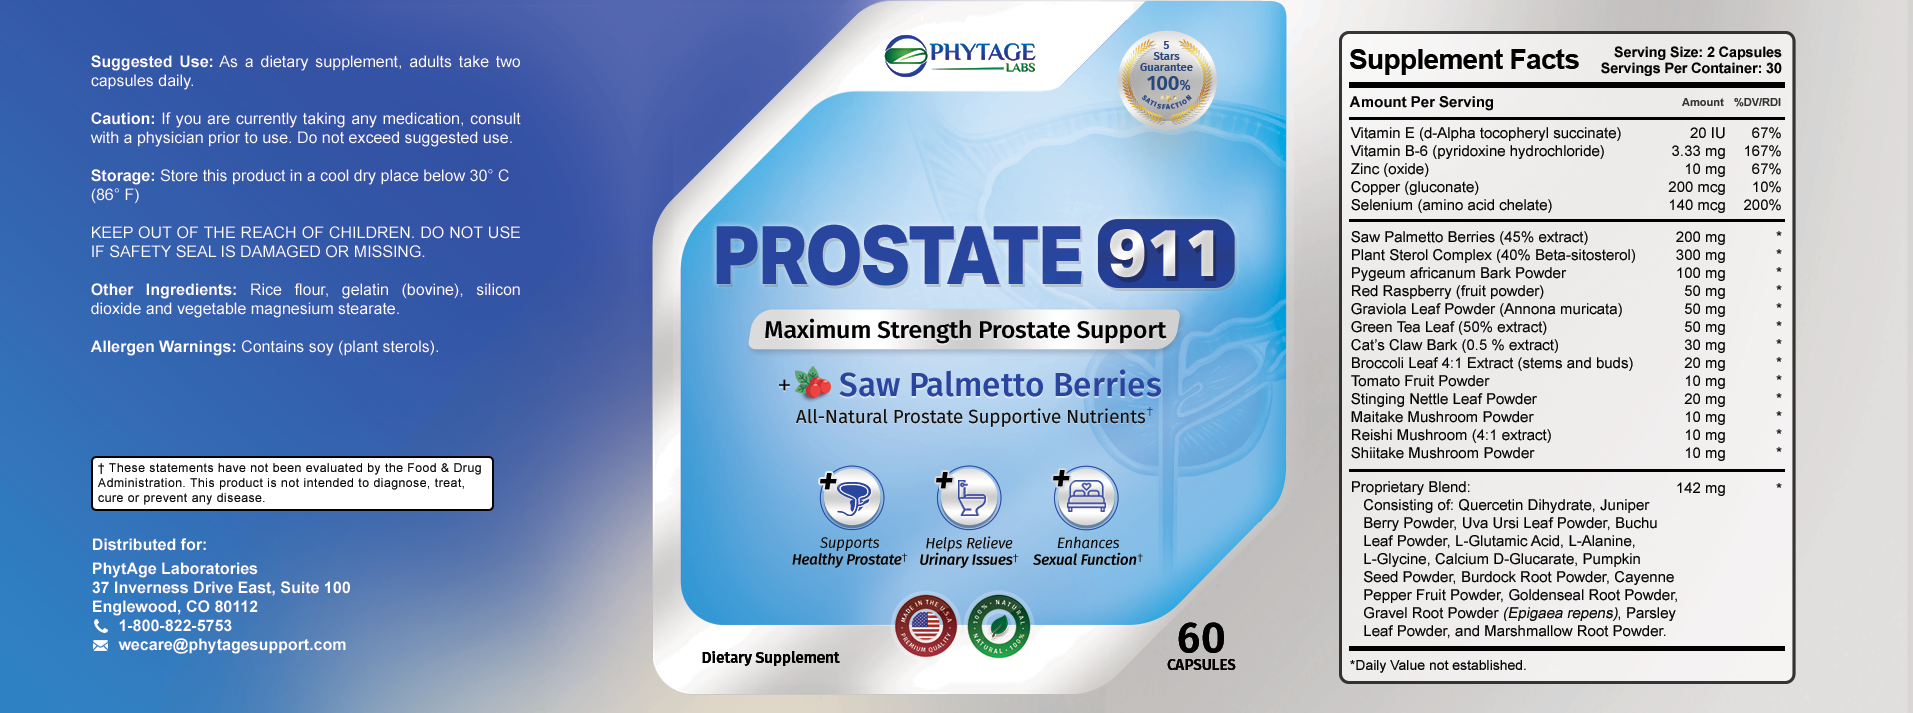 Prostate 911™ ingredients